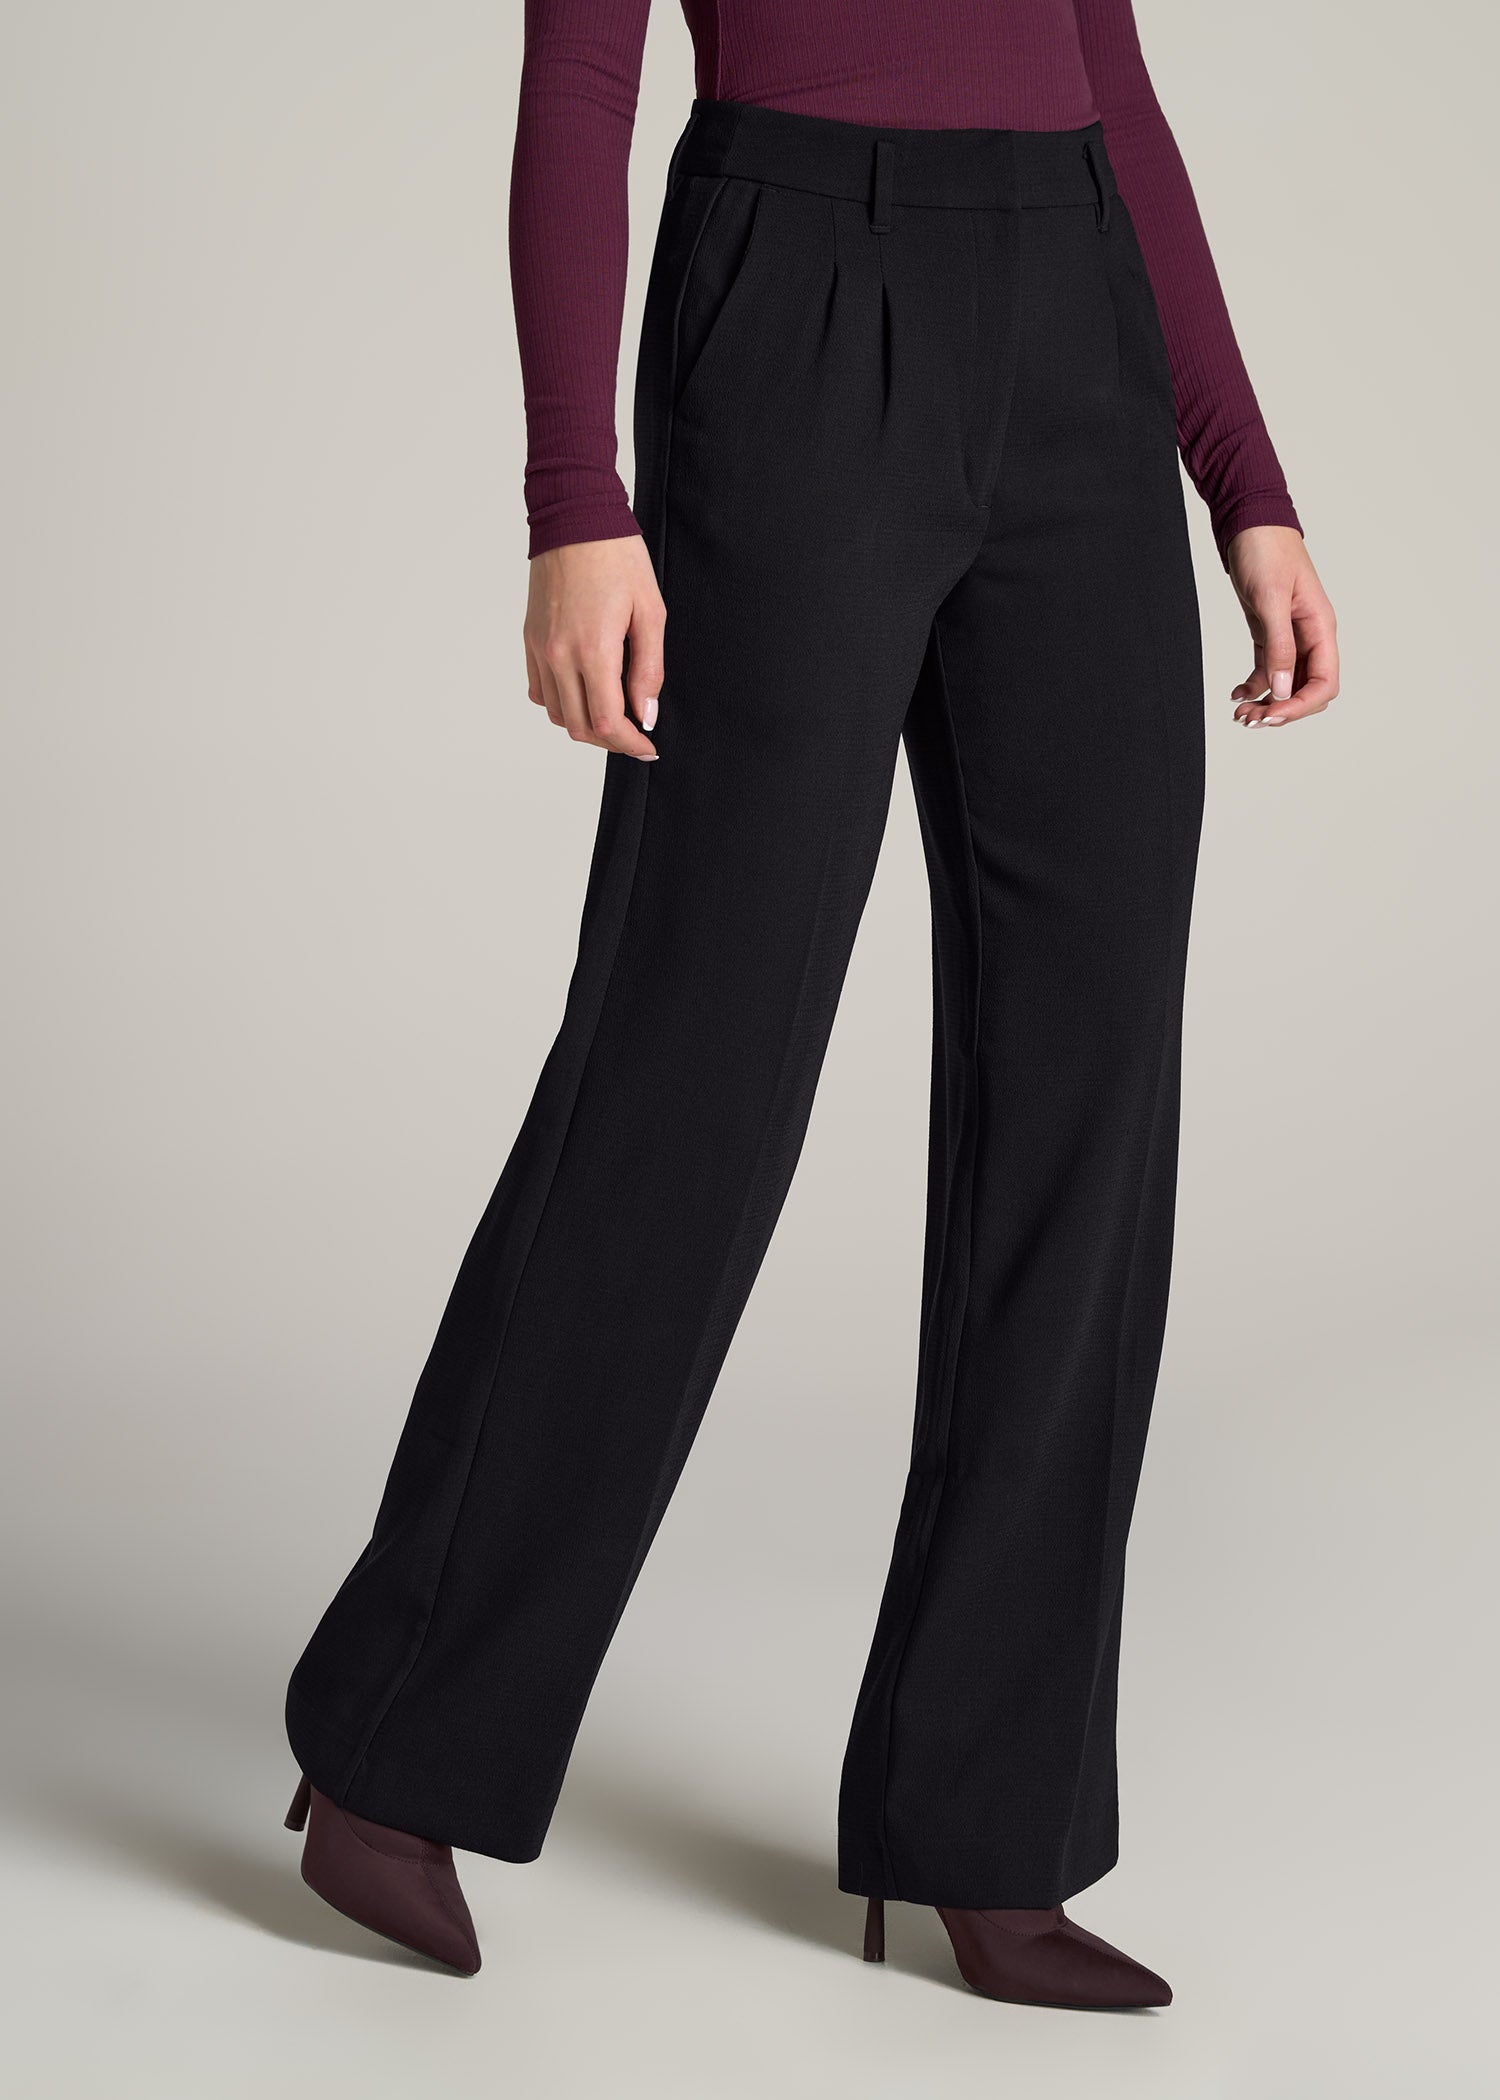       American-Tall-Women-Pleated-Dress-Pants-Black-side